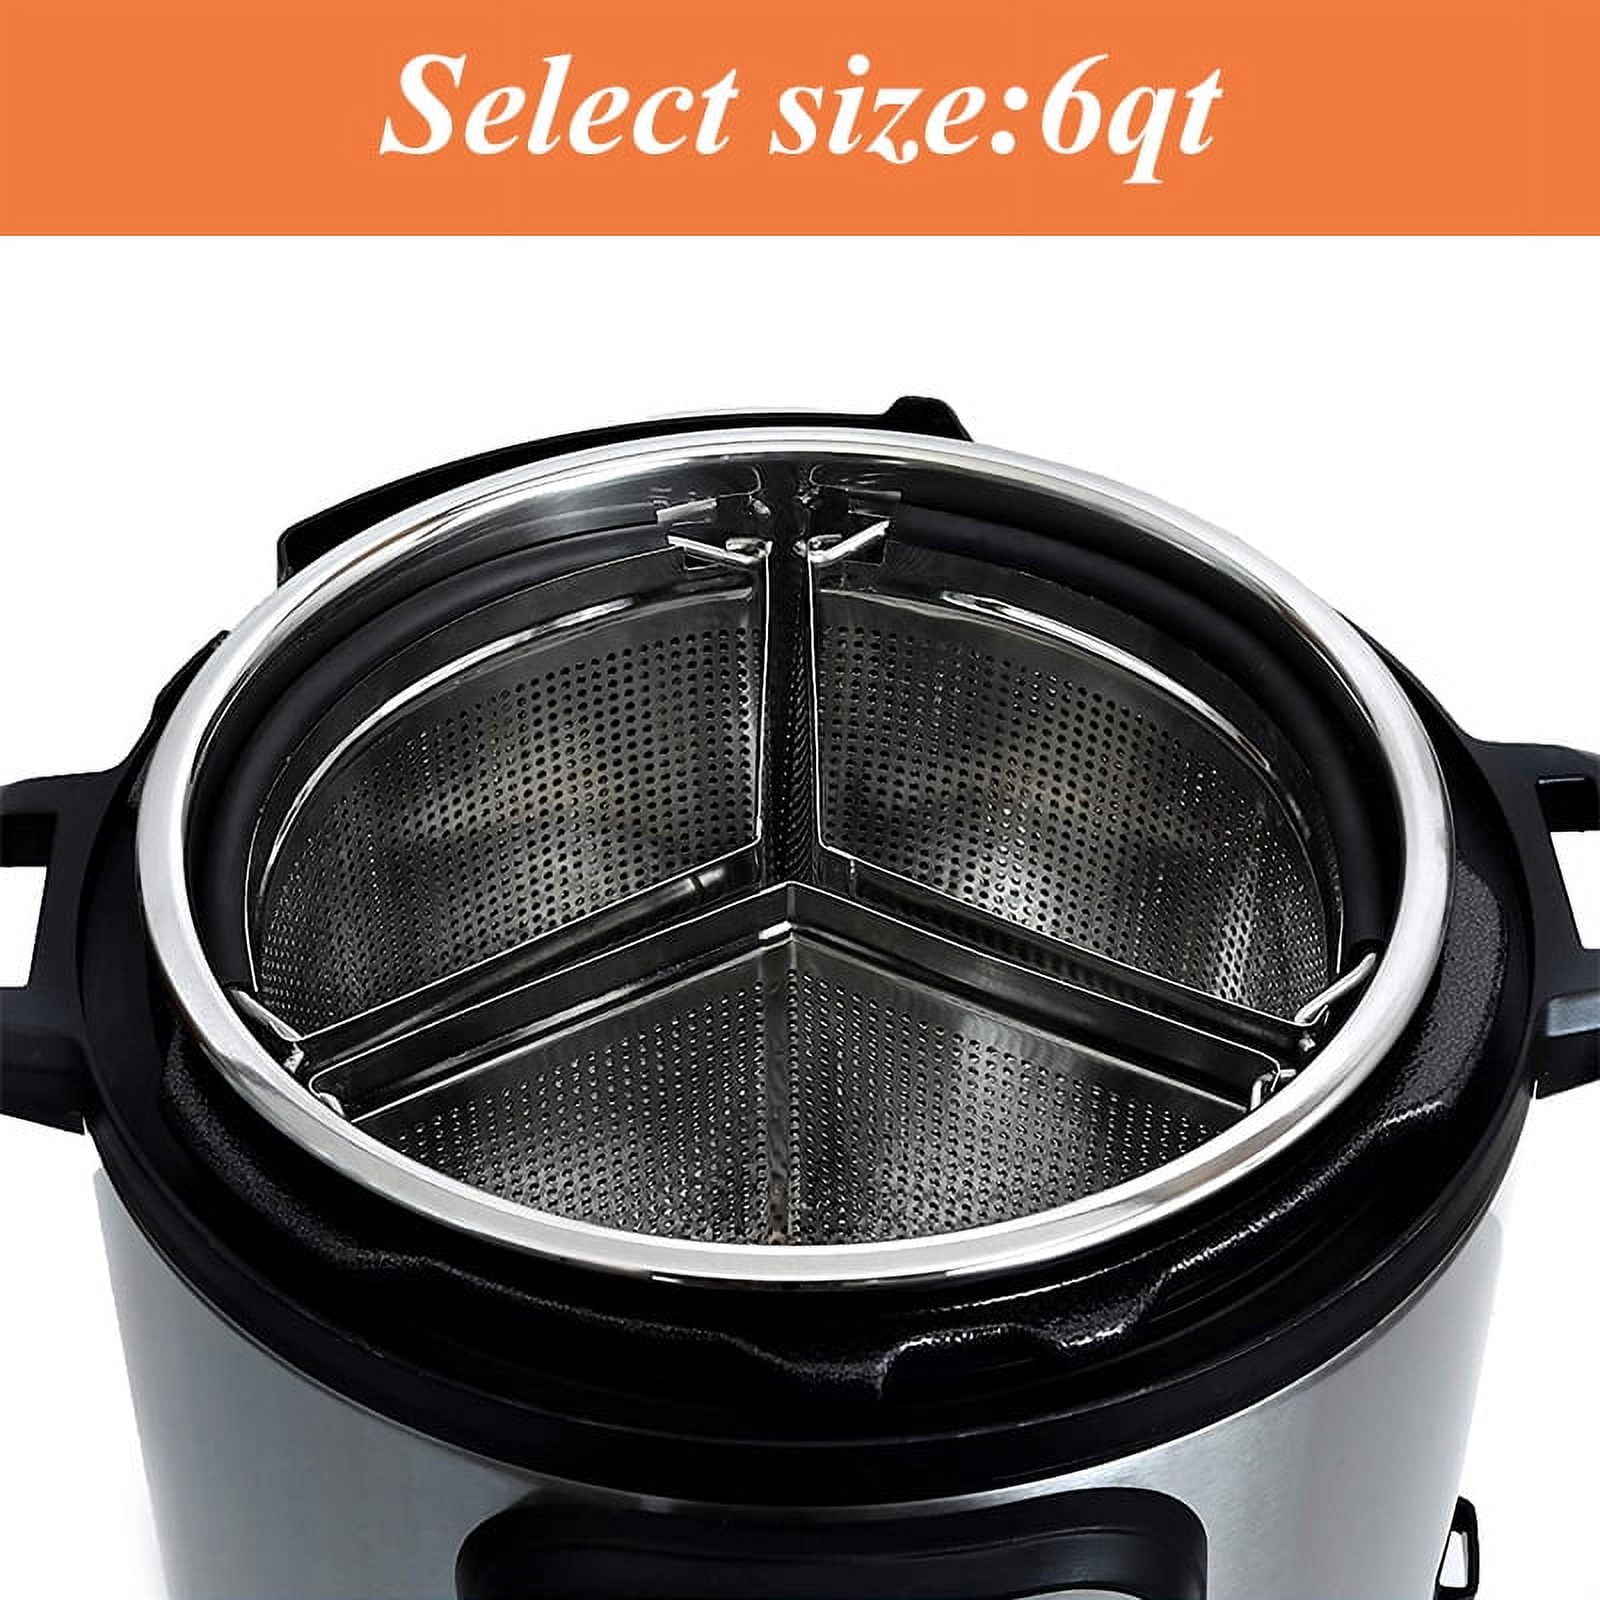 The Original Steamer Basket for Pressure Cooker Accessories 8qt [3qt 6qt  avail] Compatible with Instant Pot Accessories 8 qt, Ninja Foodi, Silicone